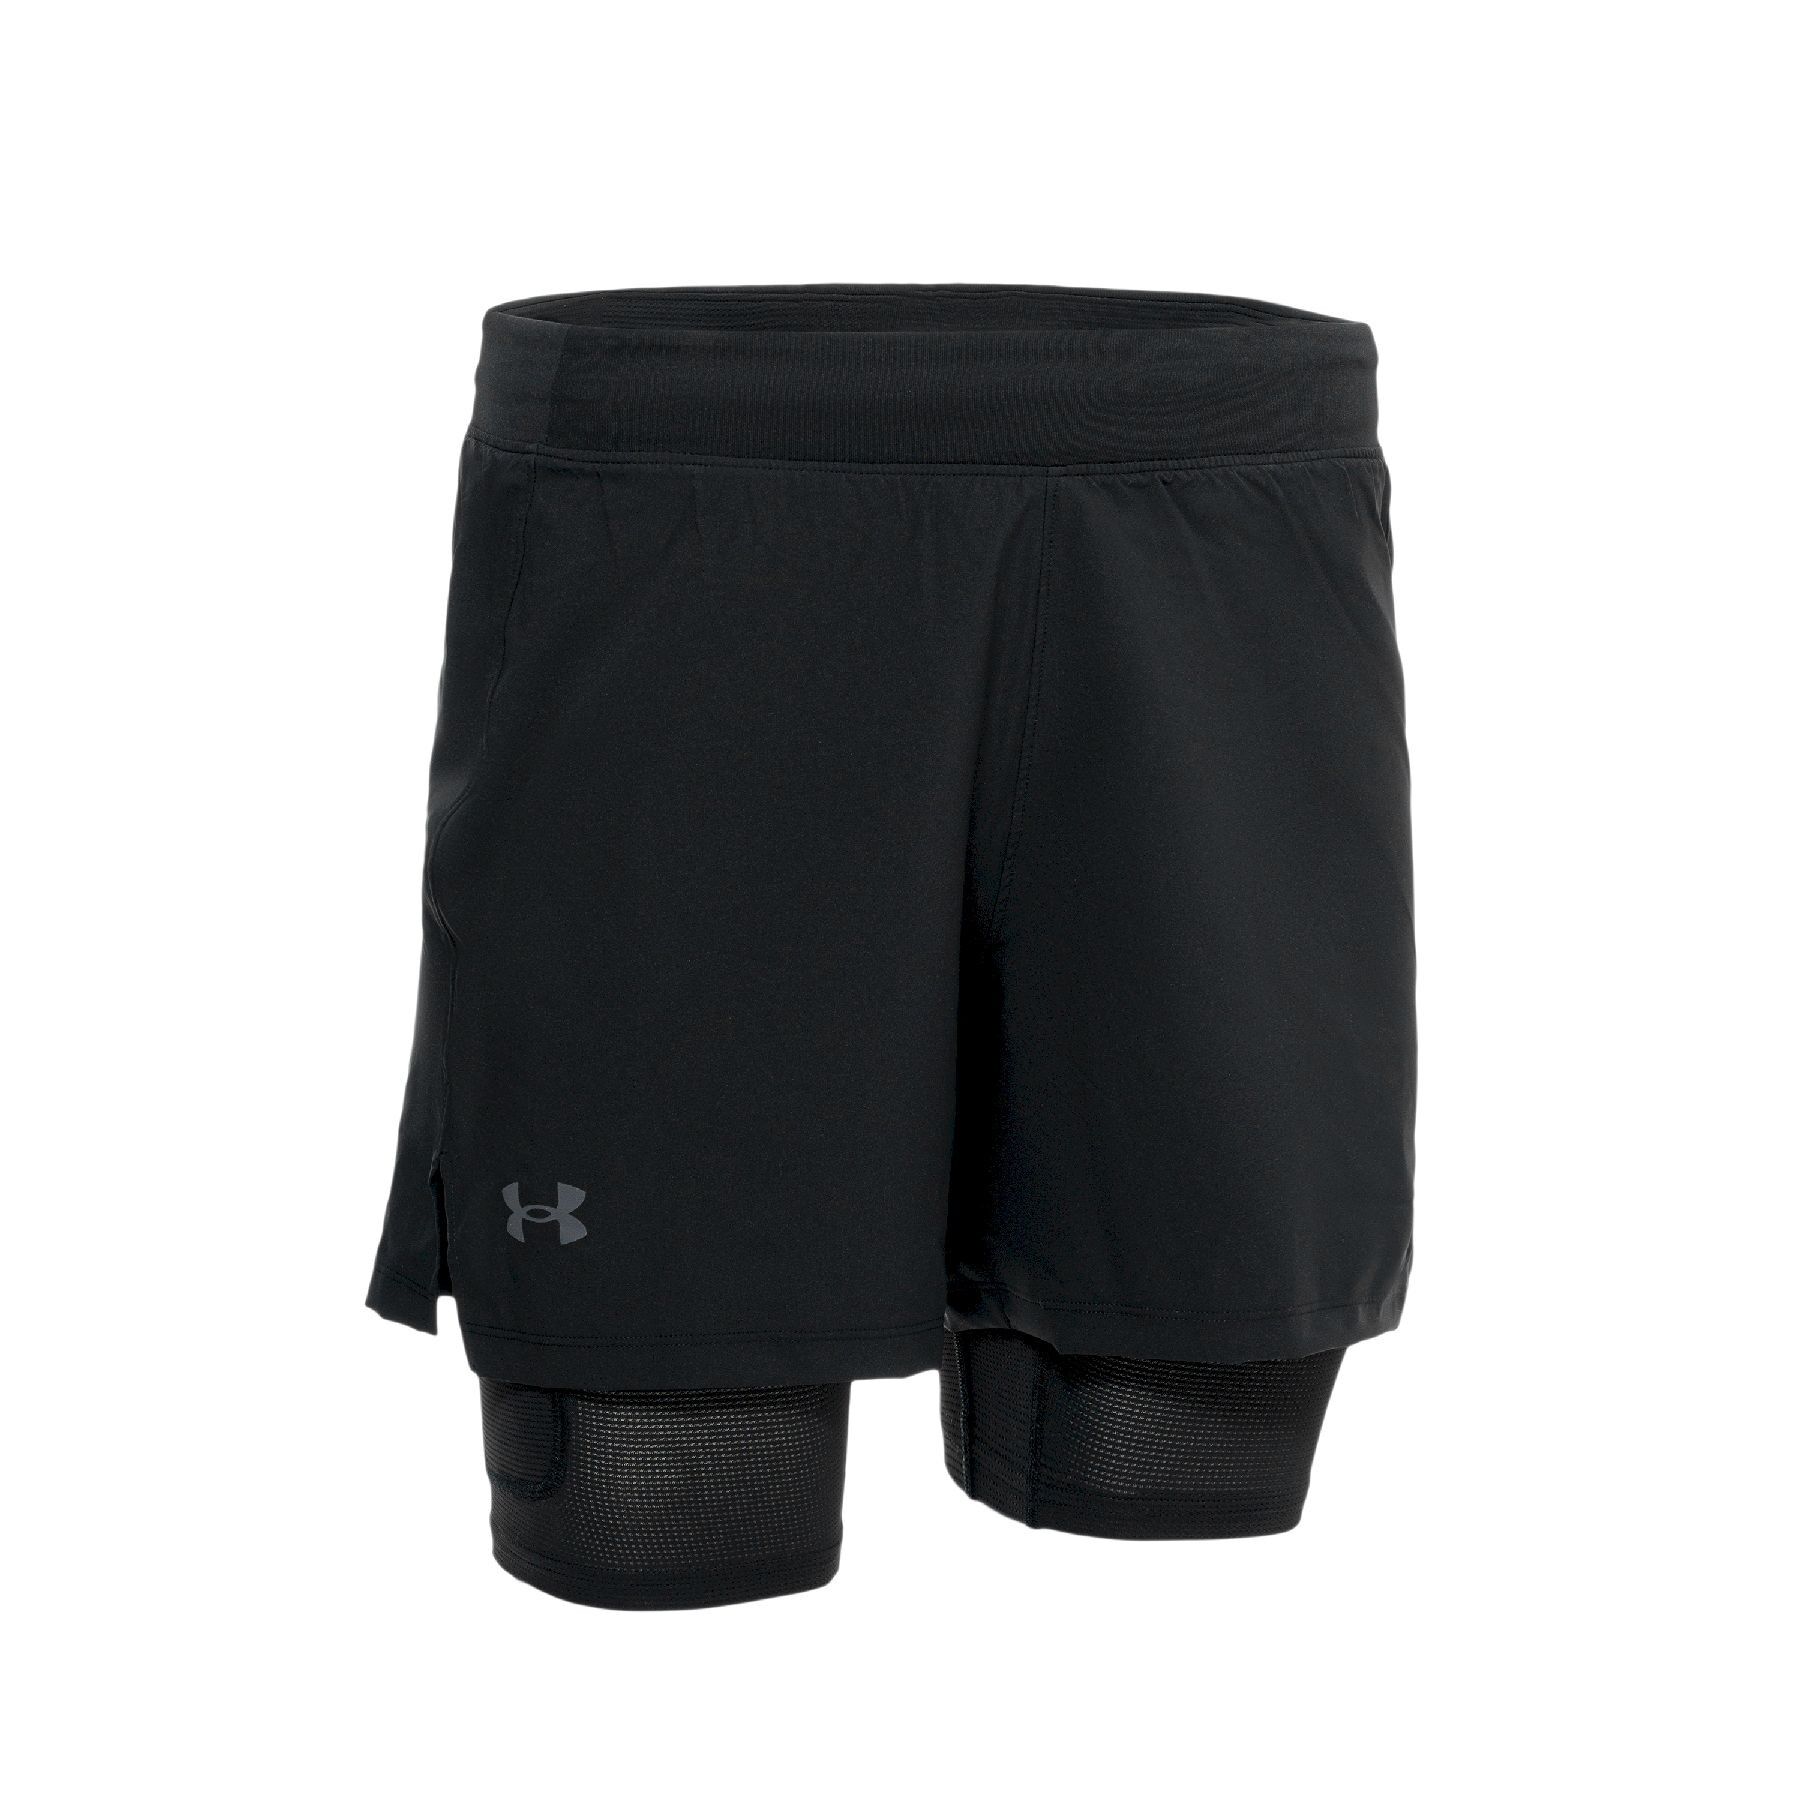 Under Armour UA Iso-Chill Run - Running shorts - Men's